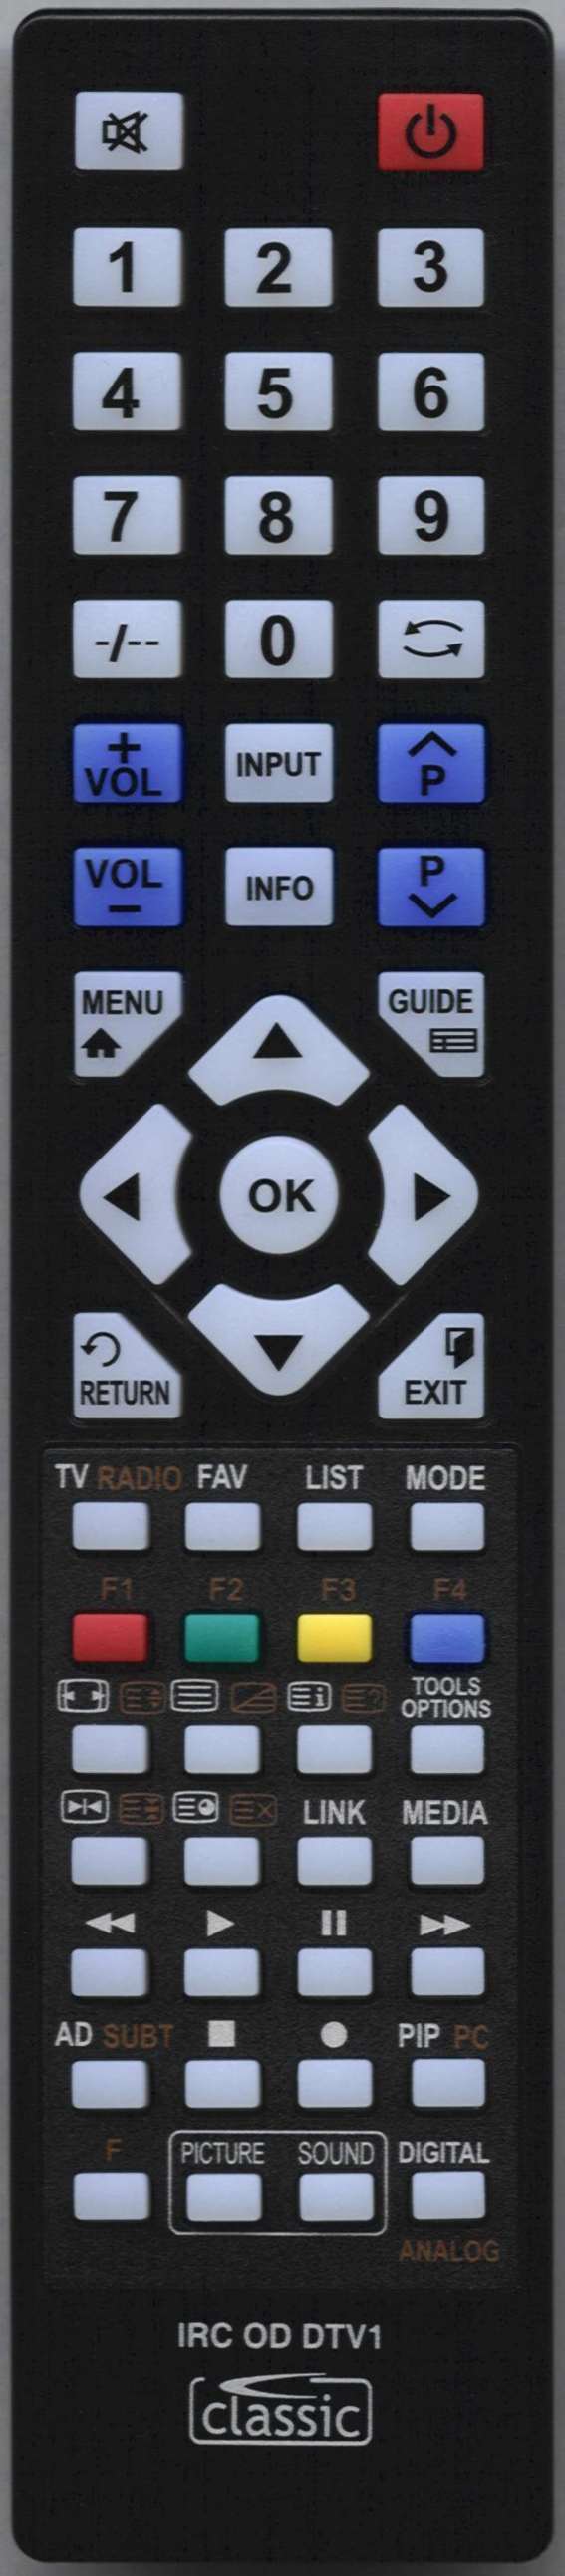 Funai LDD-B 2006 Remote Control